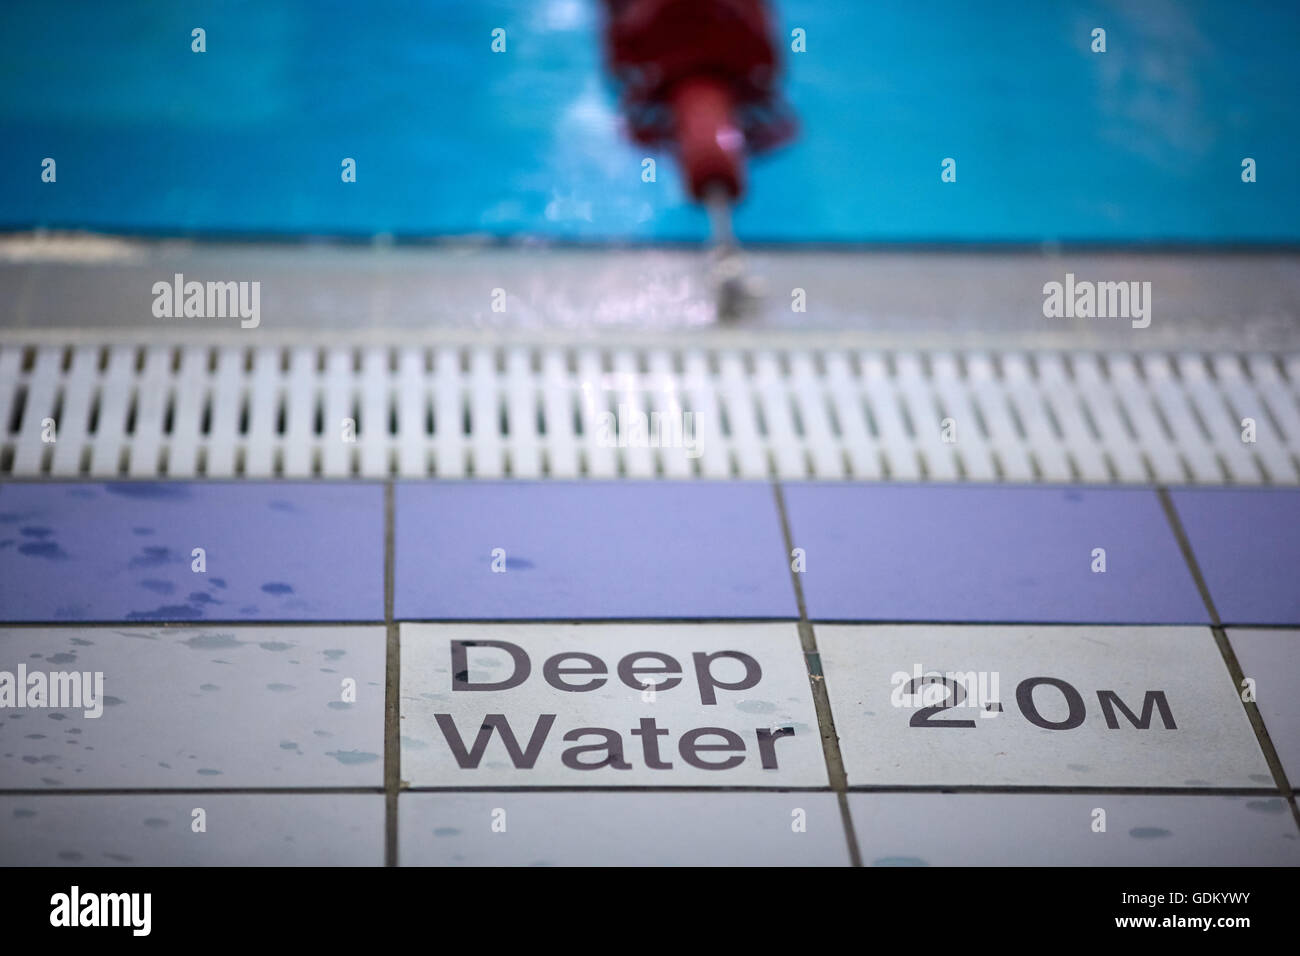 Swimming baths deep water warning sign 2 meters deep Stock Photo